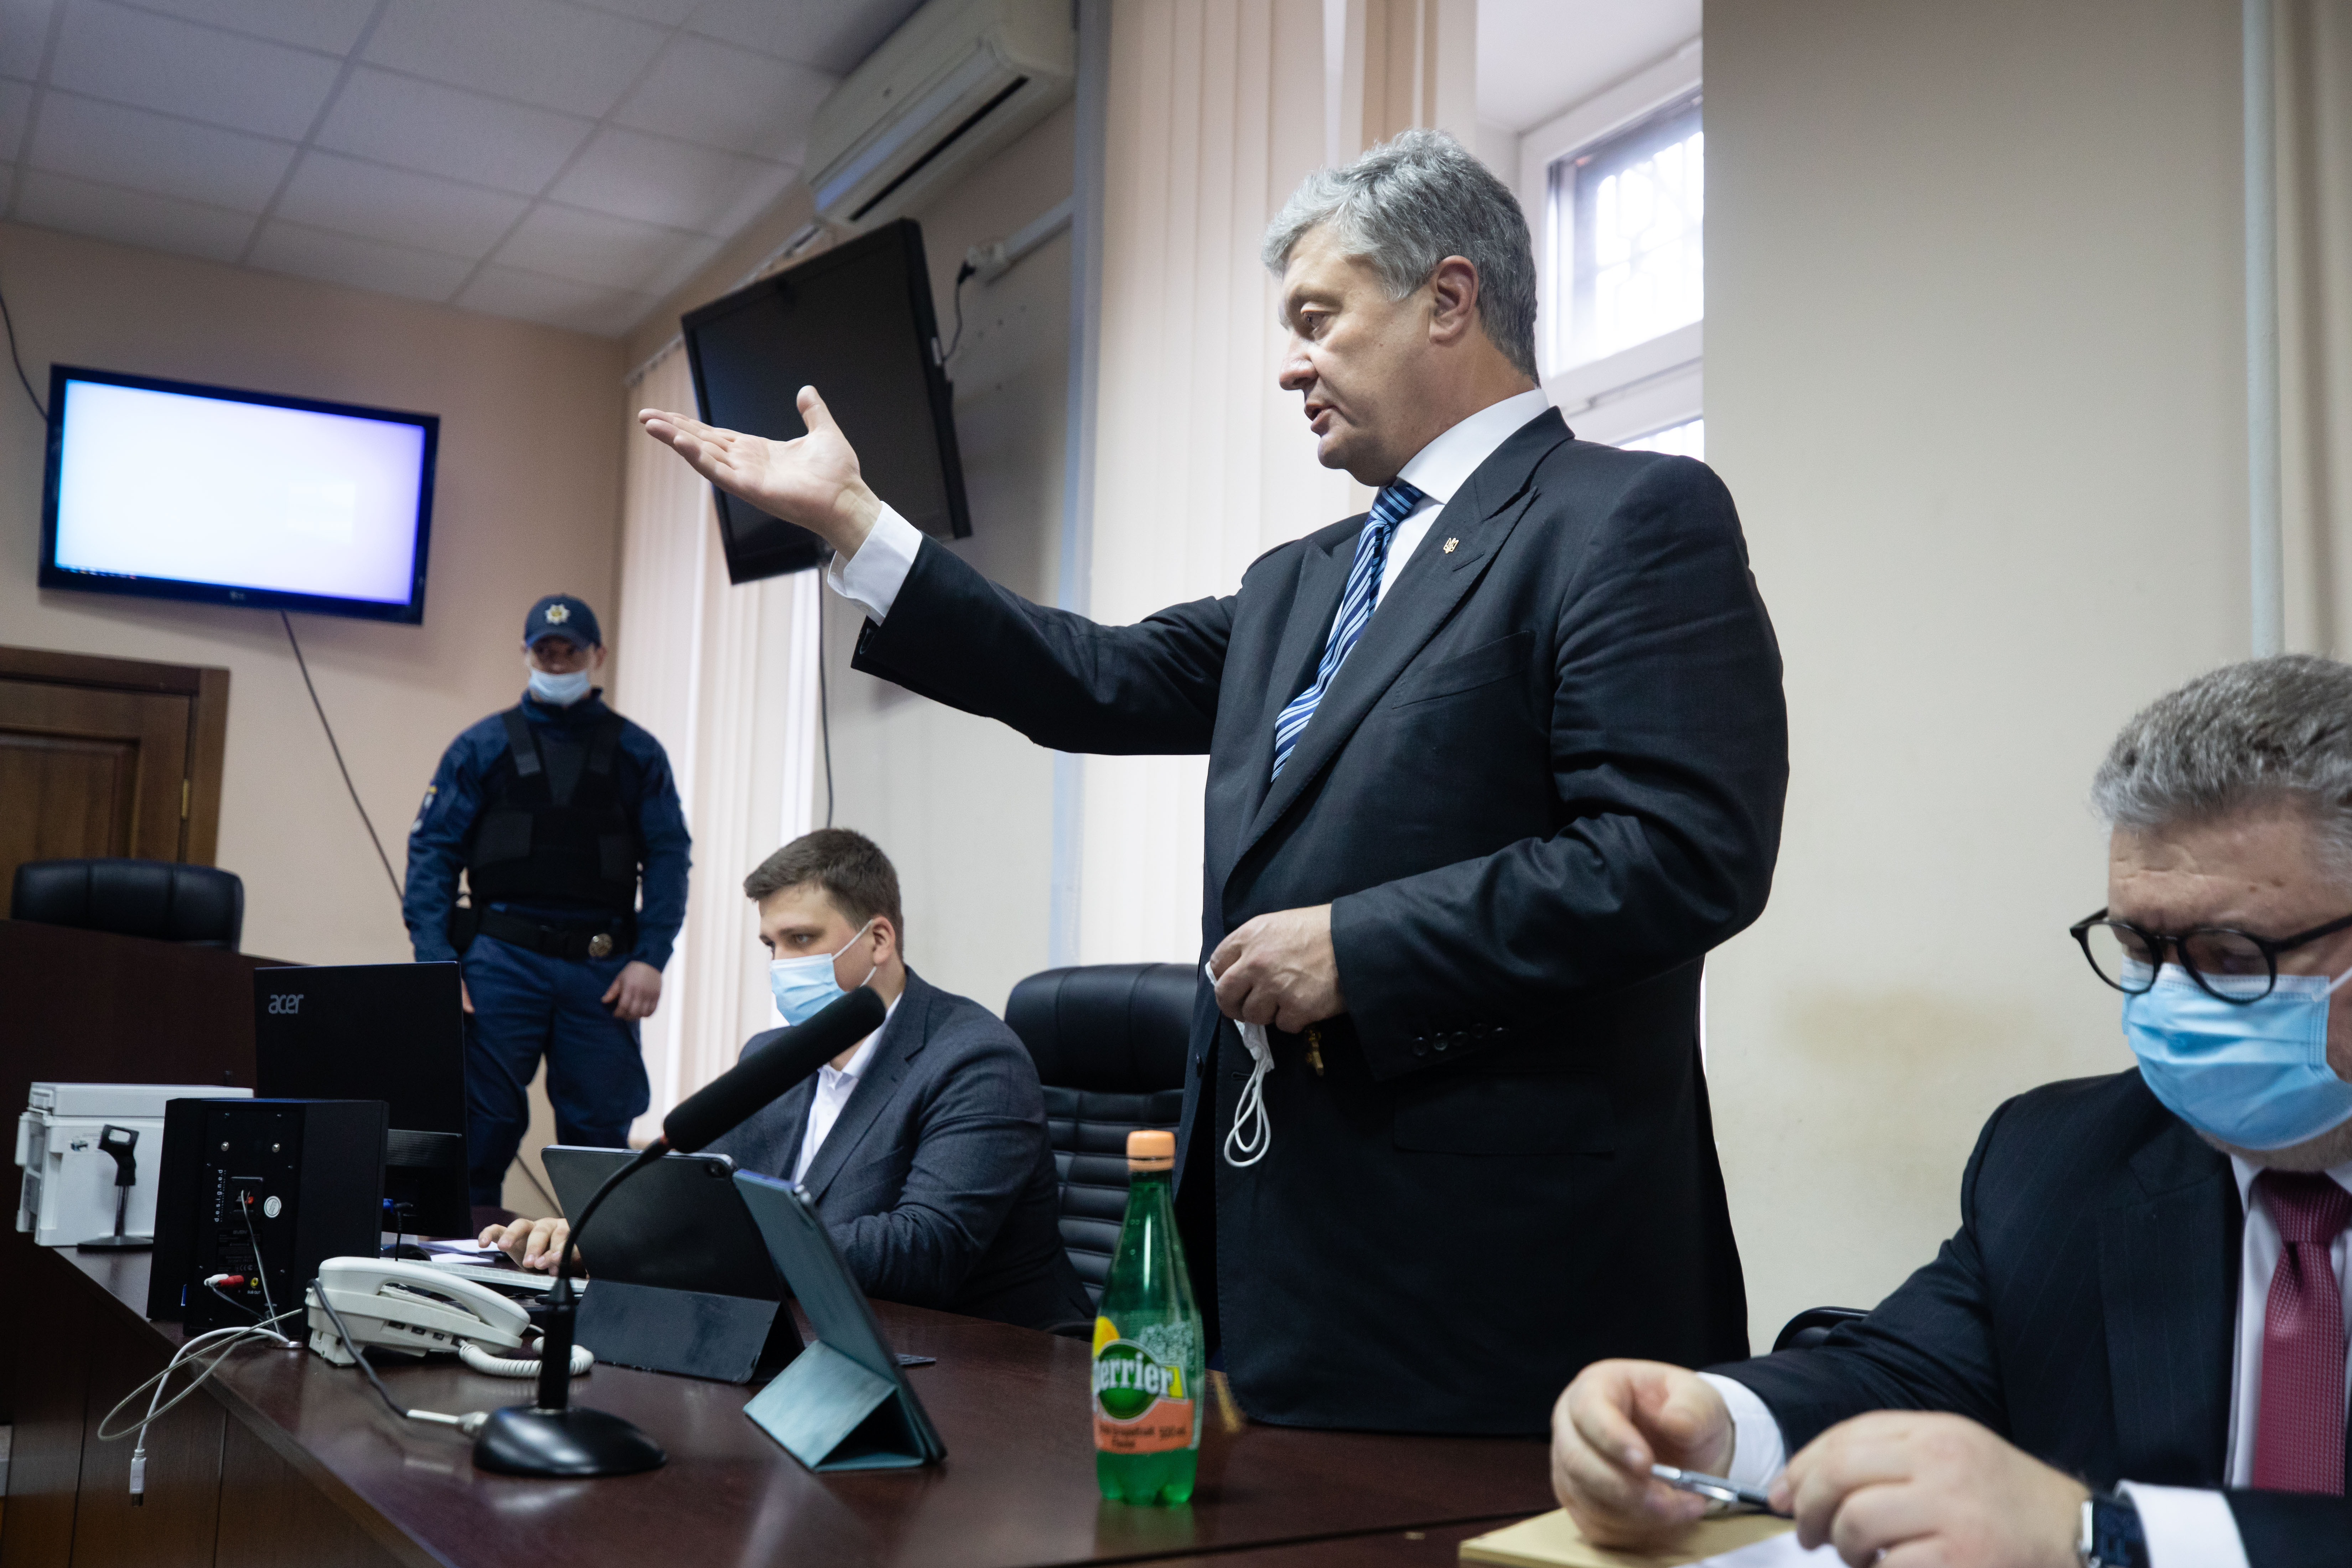 Poroshenko arrest hearing: Prosecution asks for $37 million bail, court deliberates for 11 hours without result